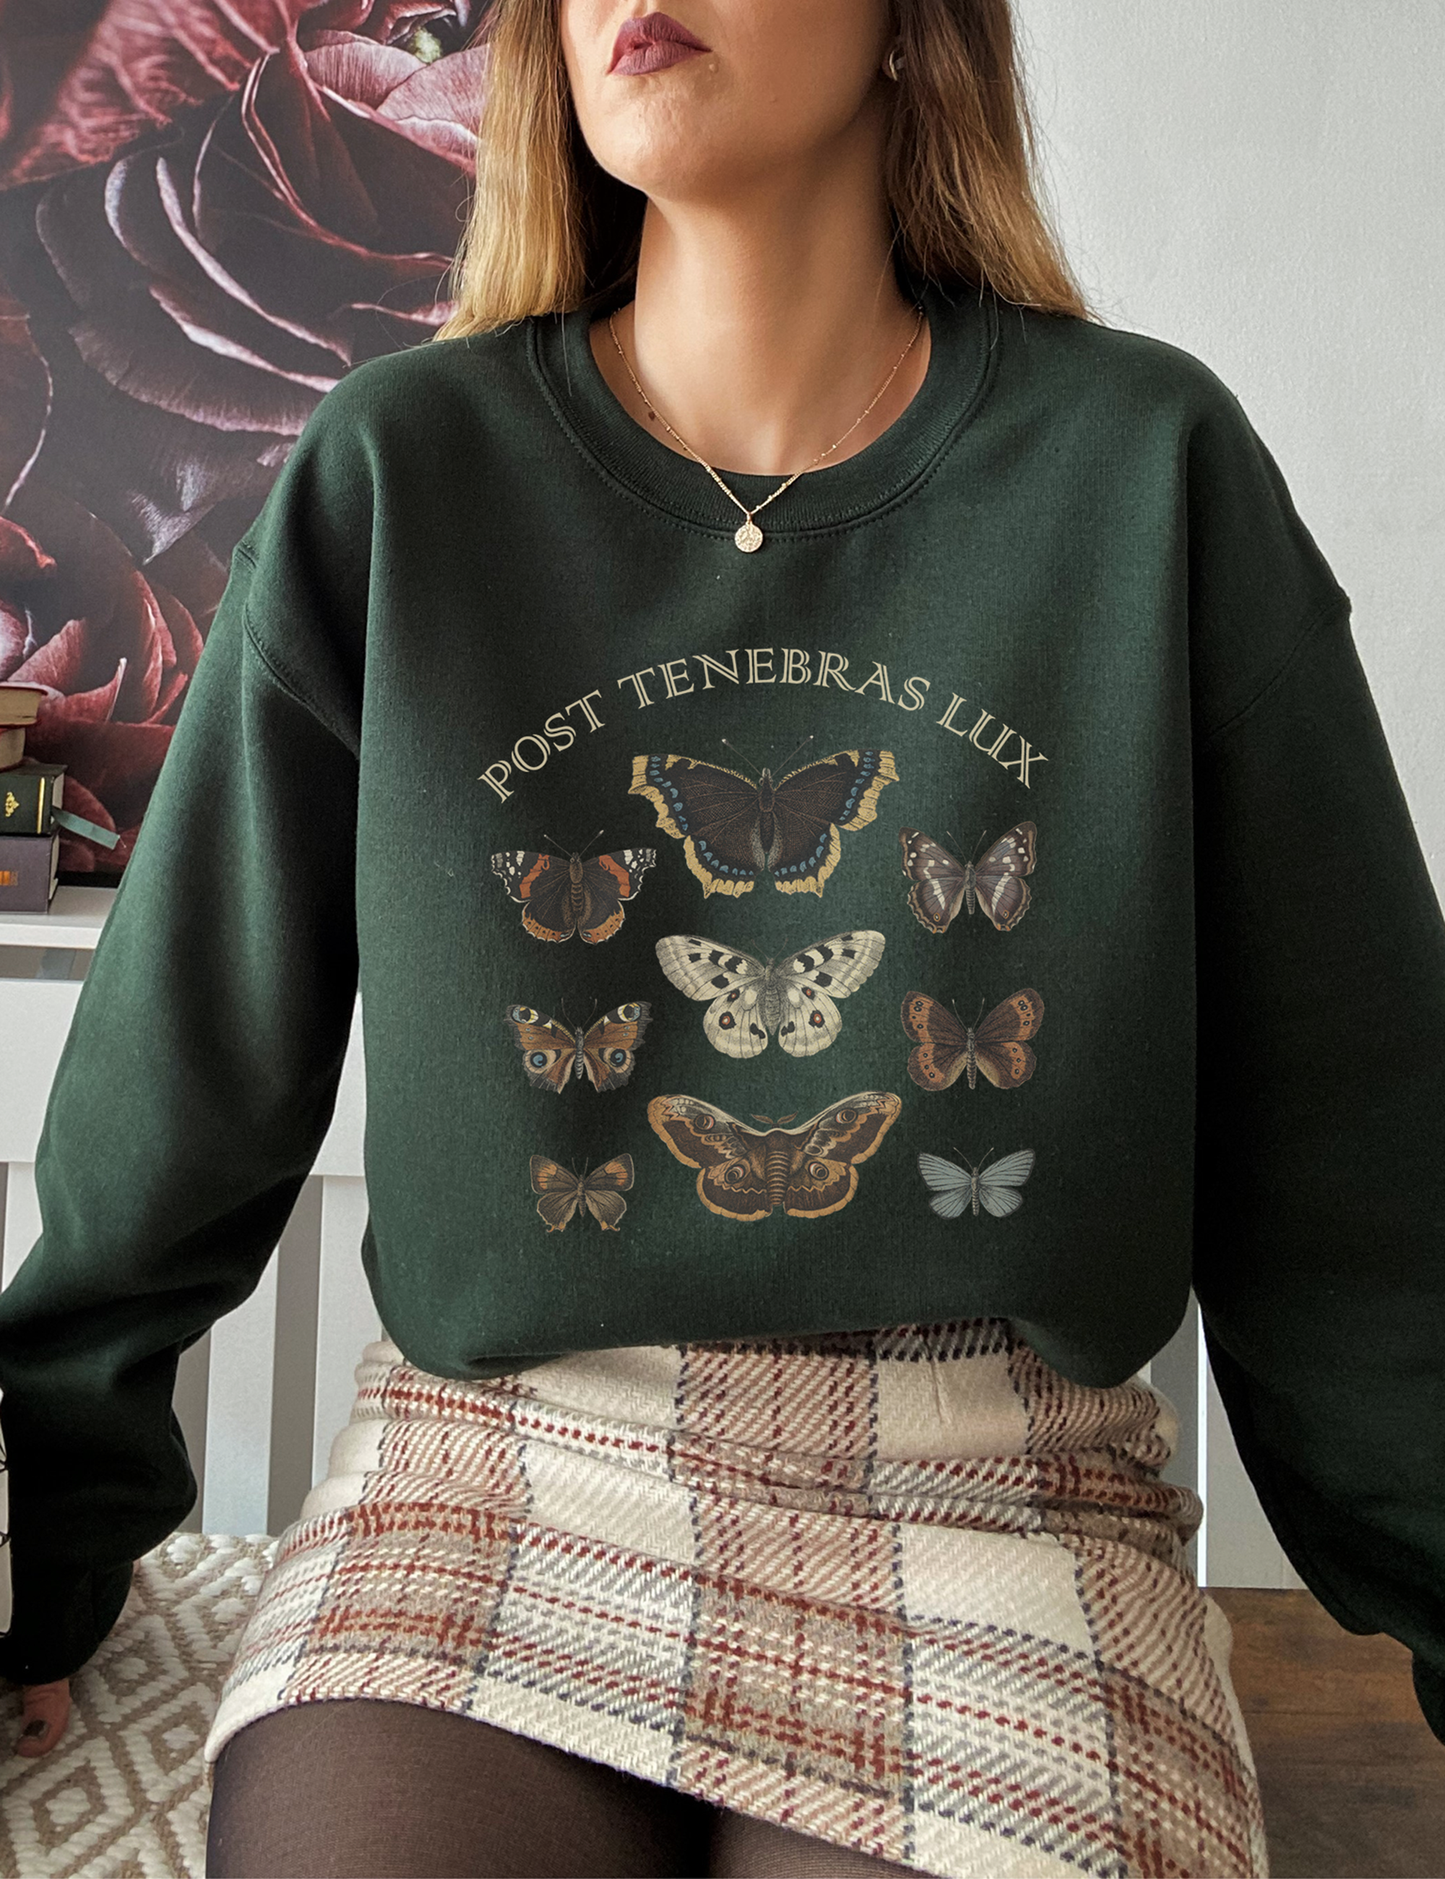 Dark Academia Post Tenebras Lux Moth Sweatshirt